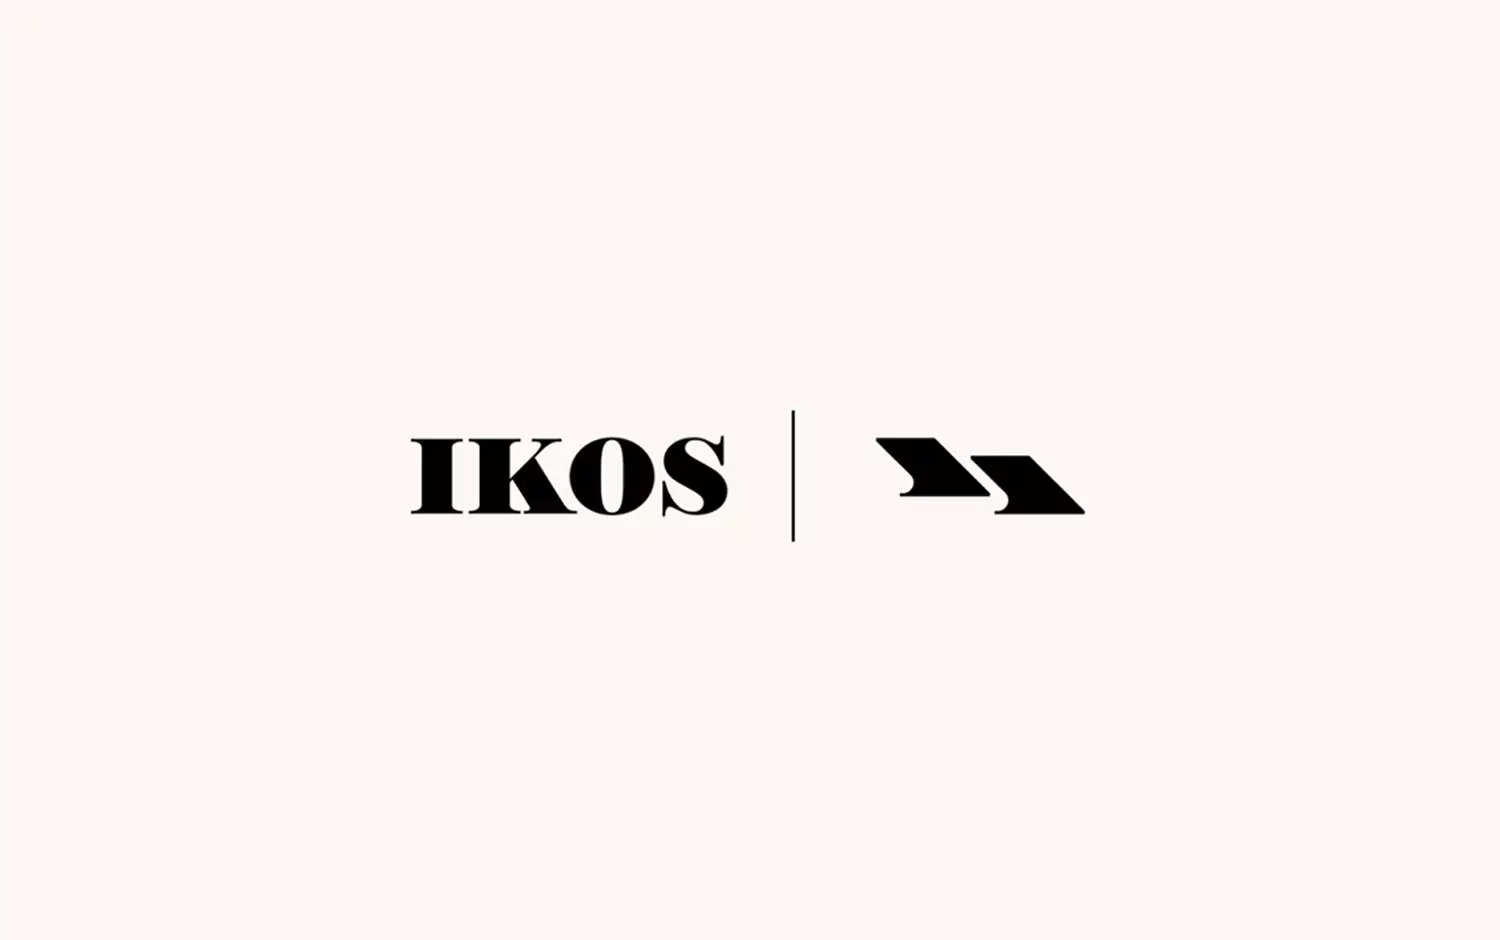 Ikos鞋业公司品牌形象设计